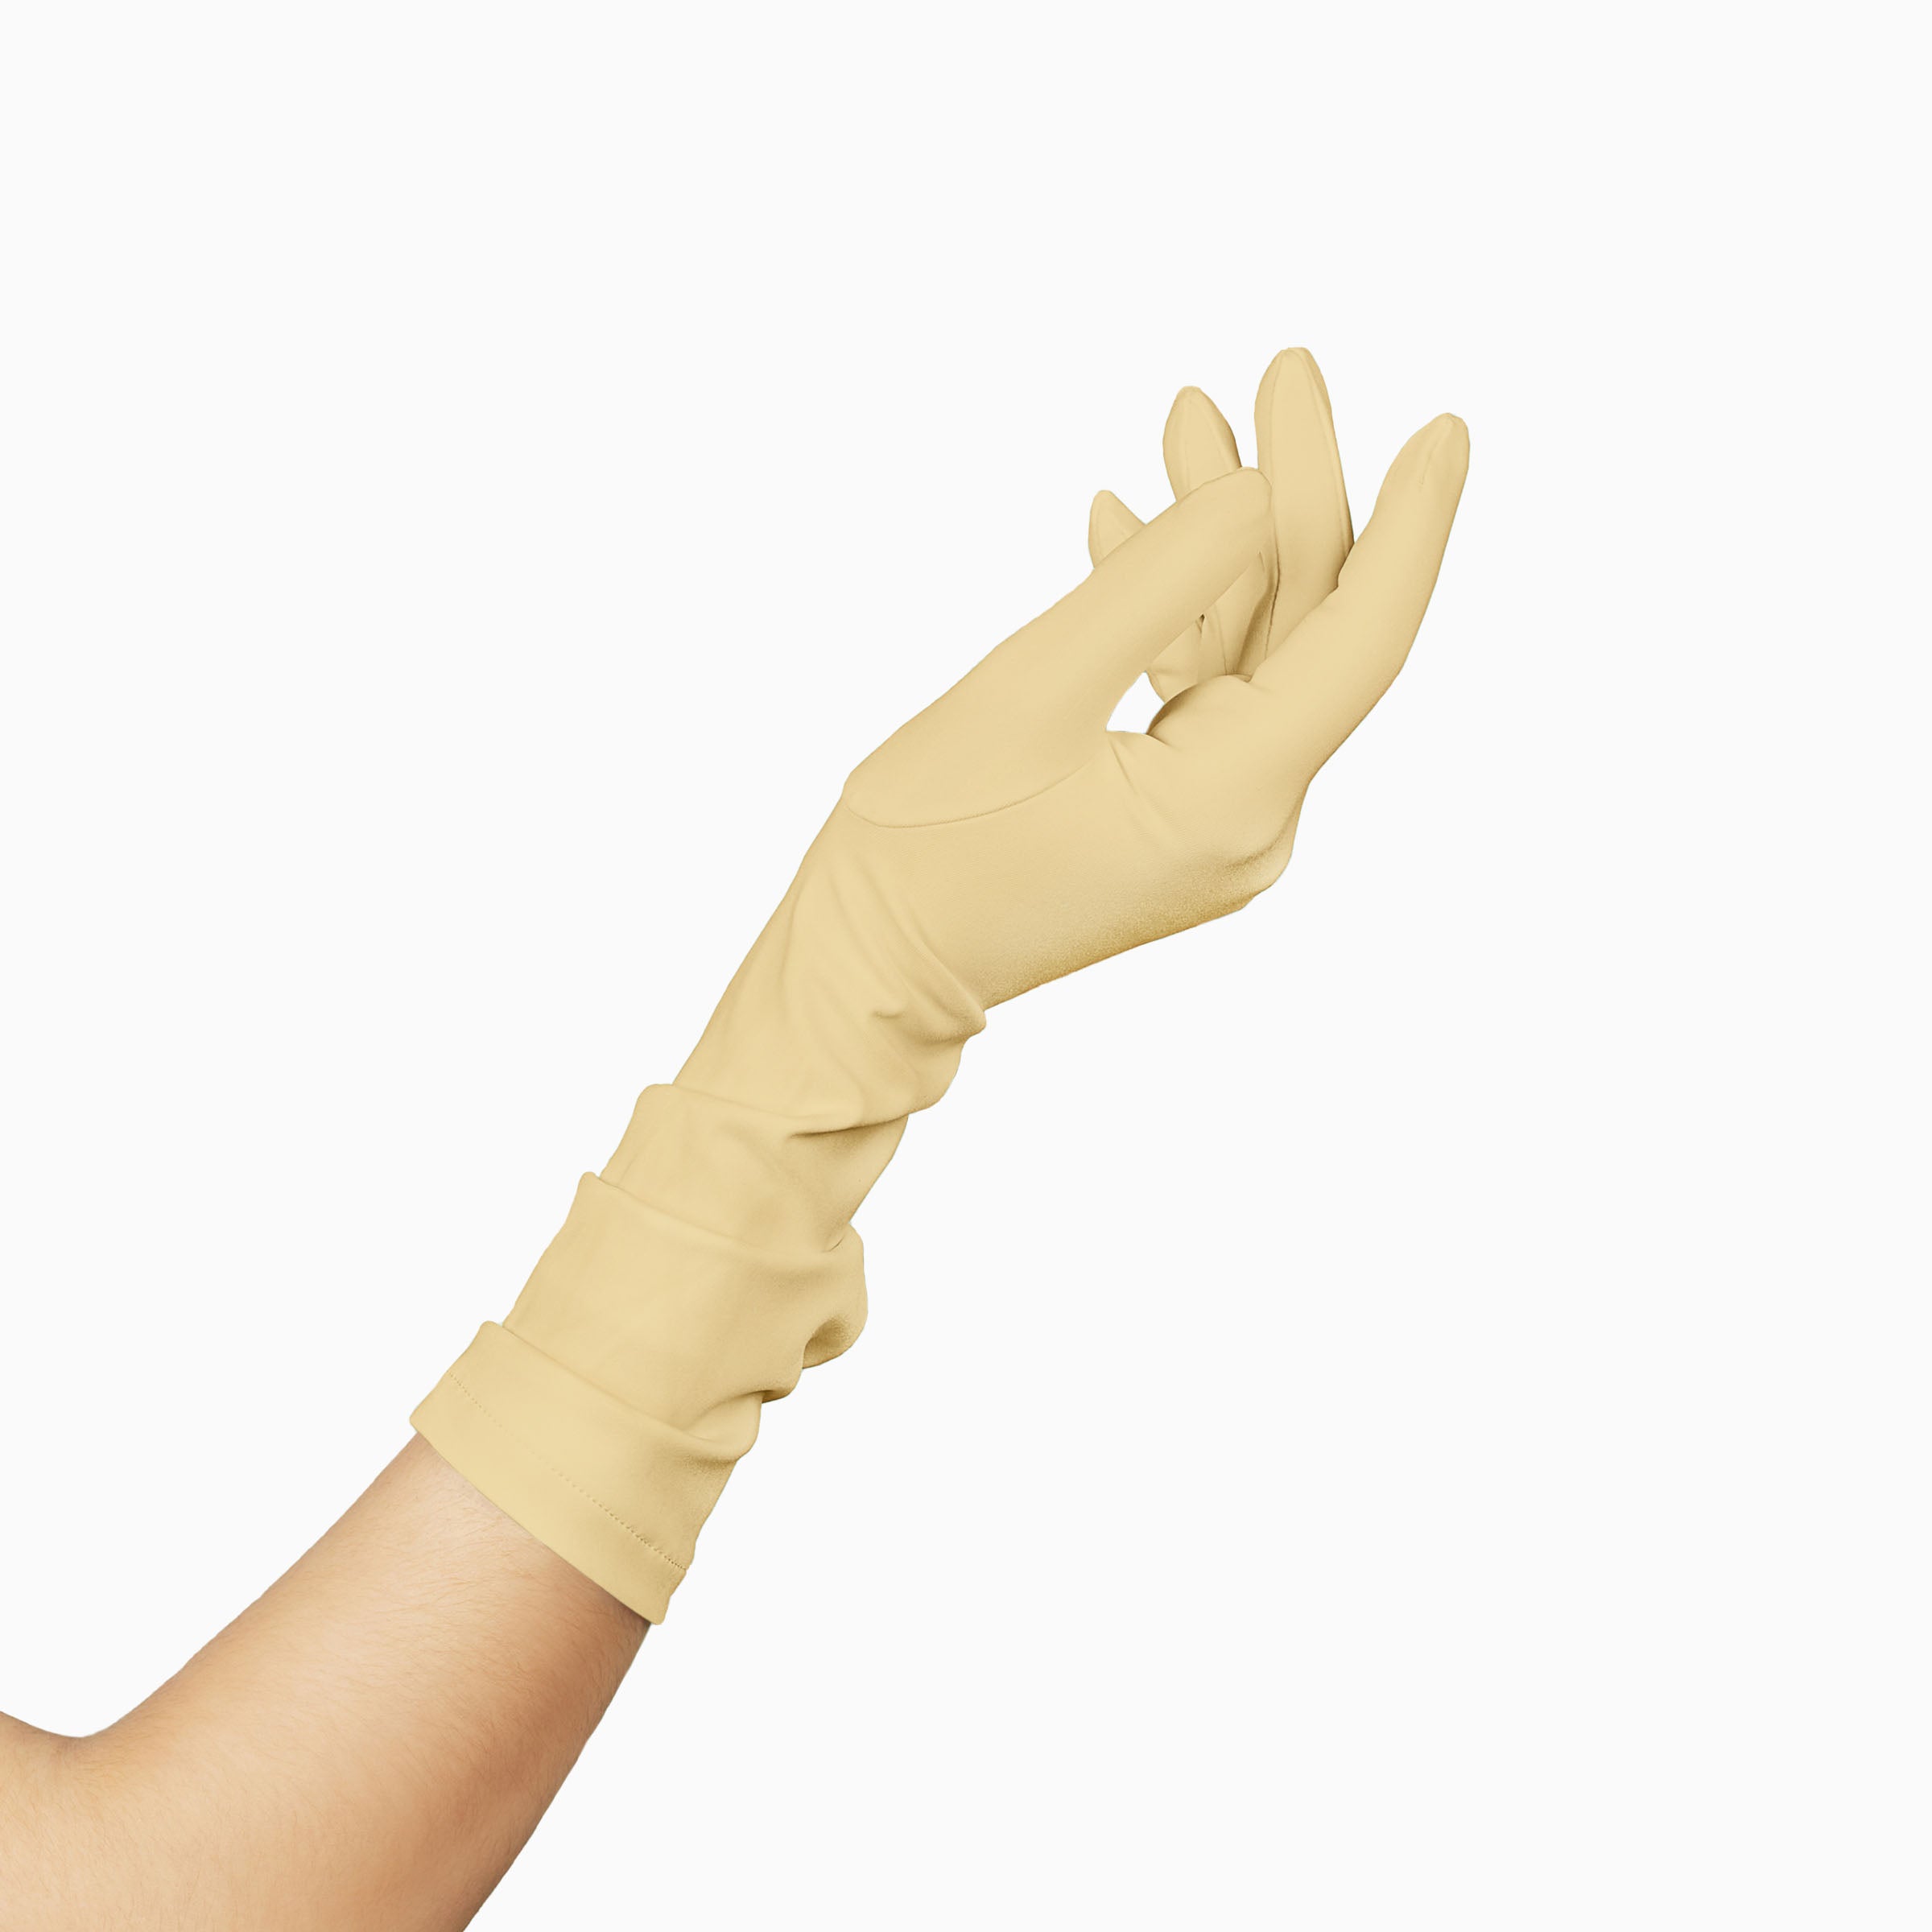 THE JILL women's formal glove in yellow.